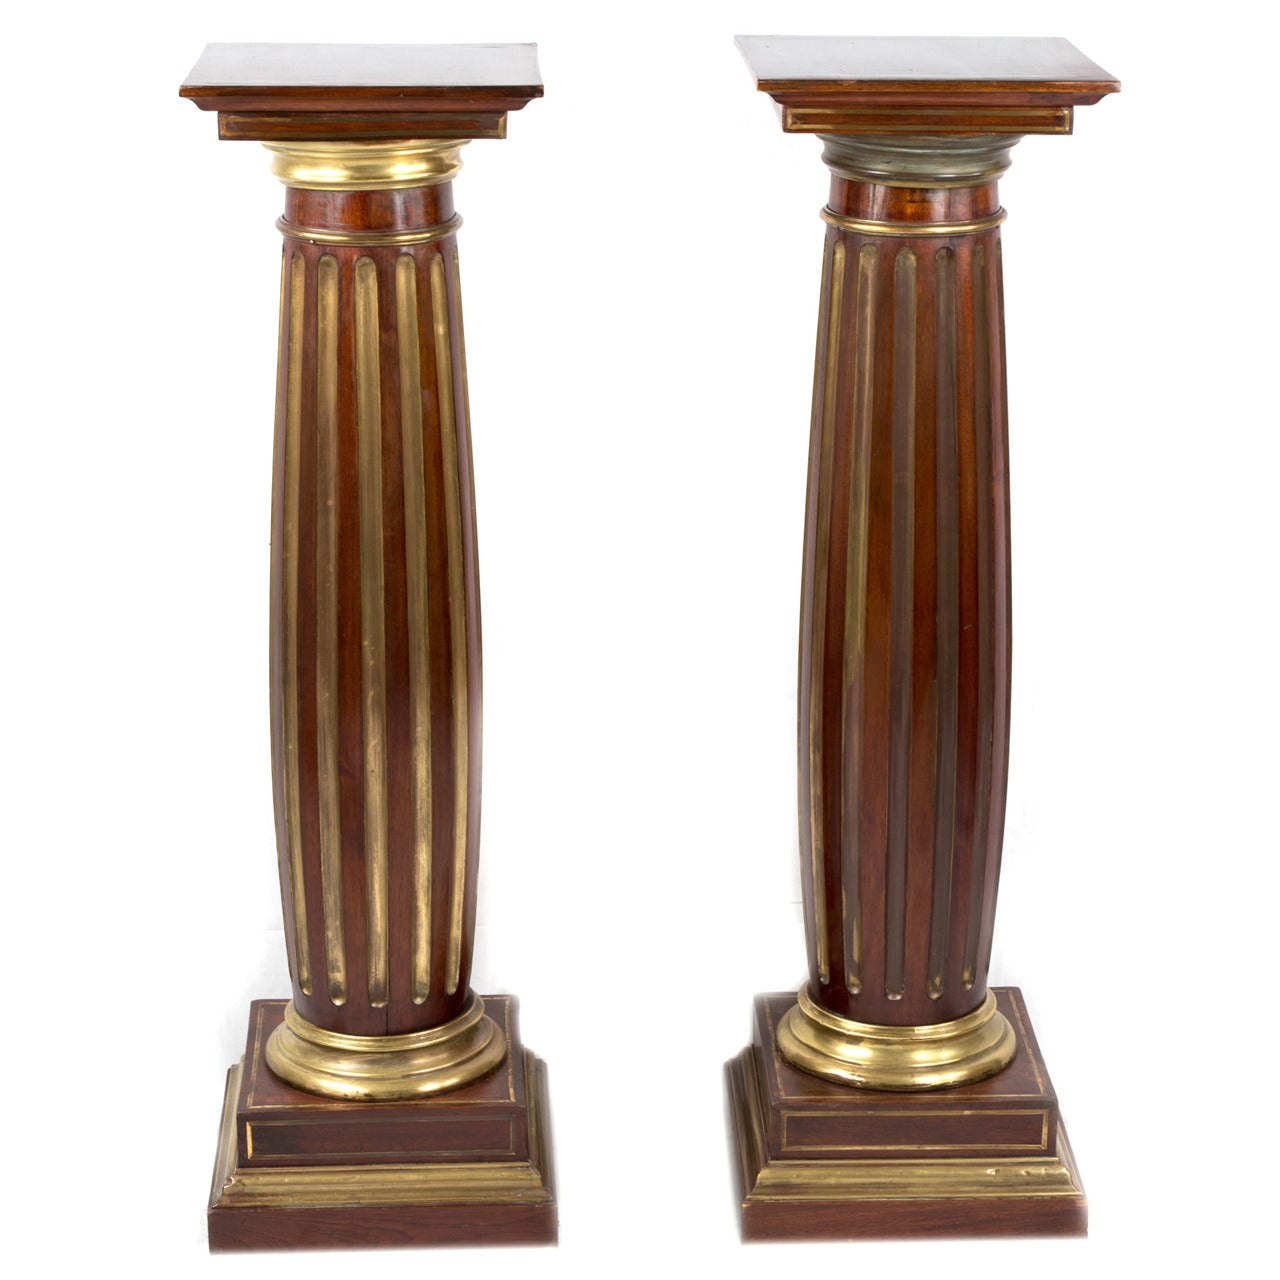 A Pair of English Mahogany, Gilt and Ormolu Pedestals